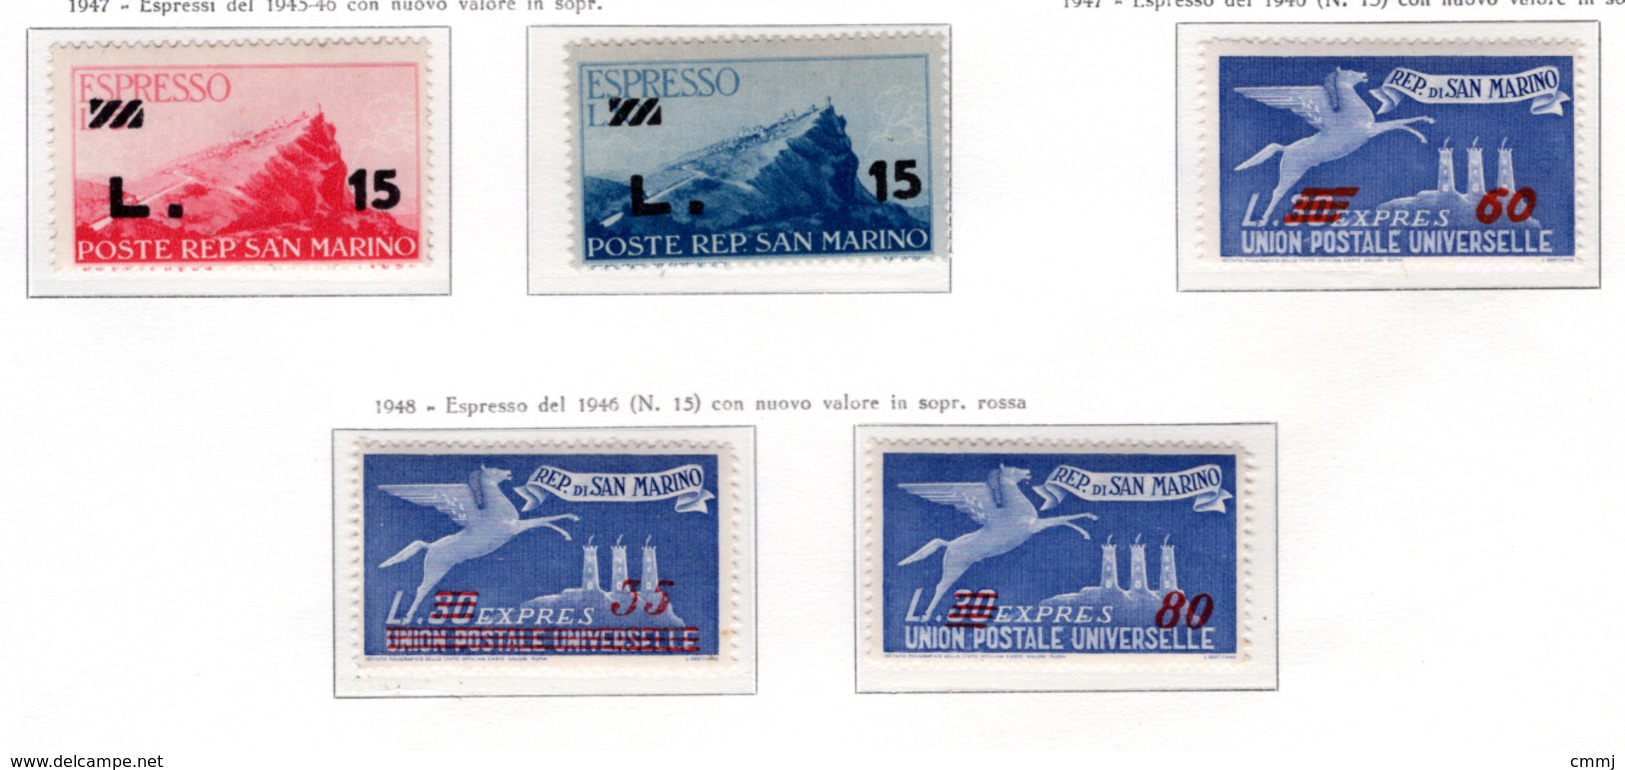 1947/48 - SAINT-MARIN - SAN MARINO - Catg. Unif. EX 16/20 - NH - (SM2017.28...) - Express Letter Stamps